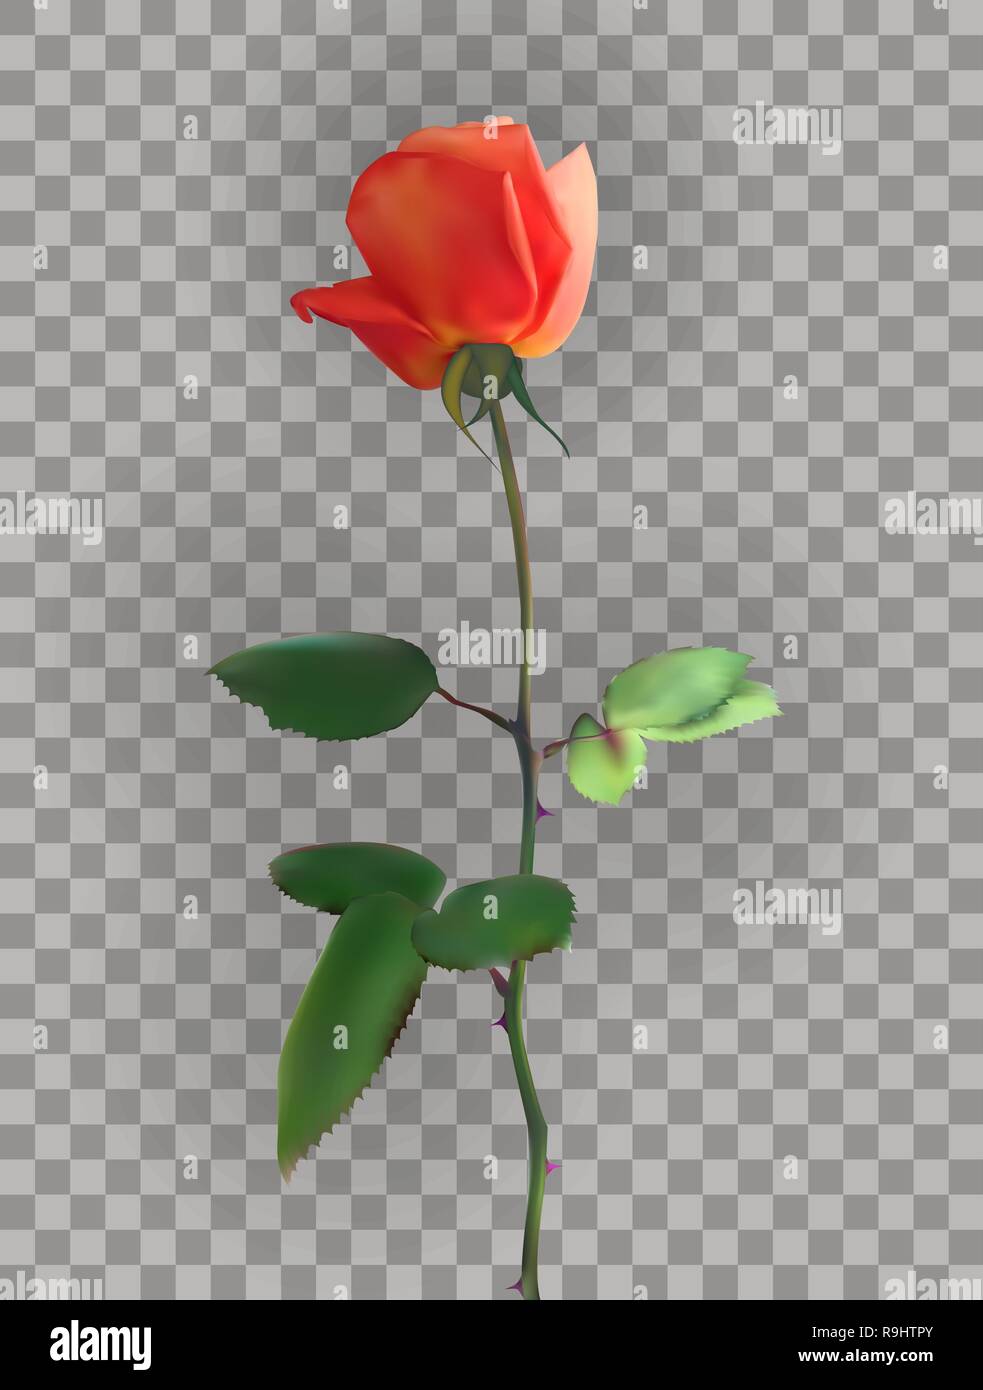 Hermosa Rosa Rosa surge sobre un fondo transparente. Ilustración vectorial.  EPS10 Imagen Vector de stock - Alamy